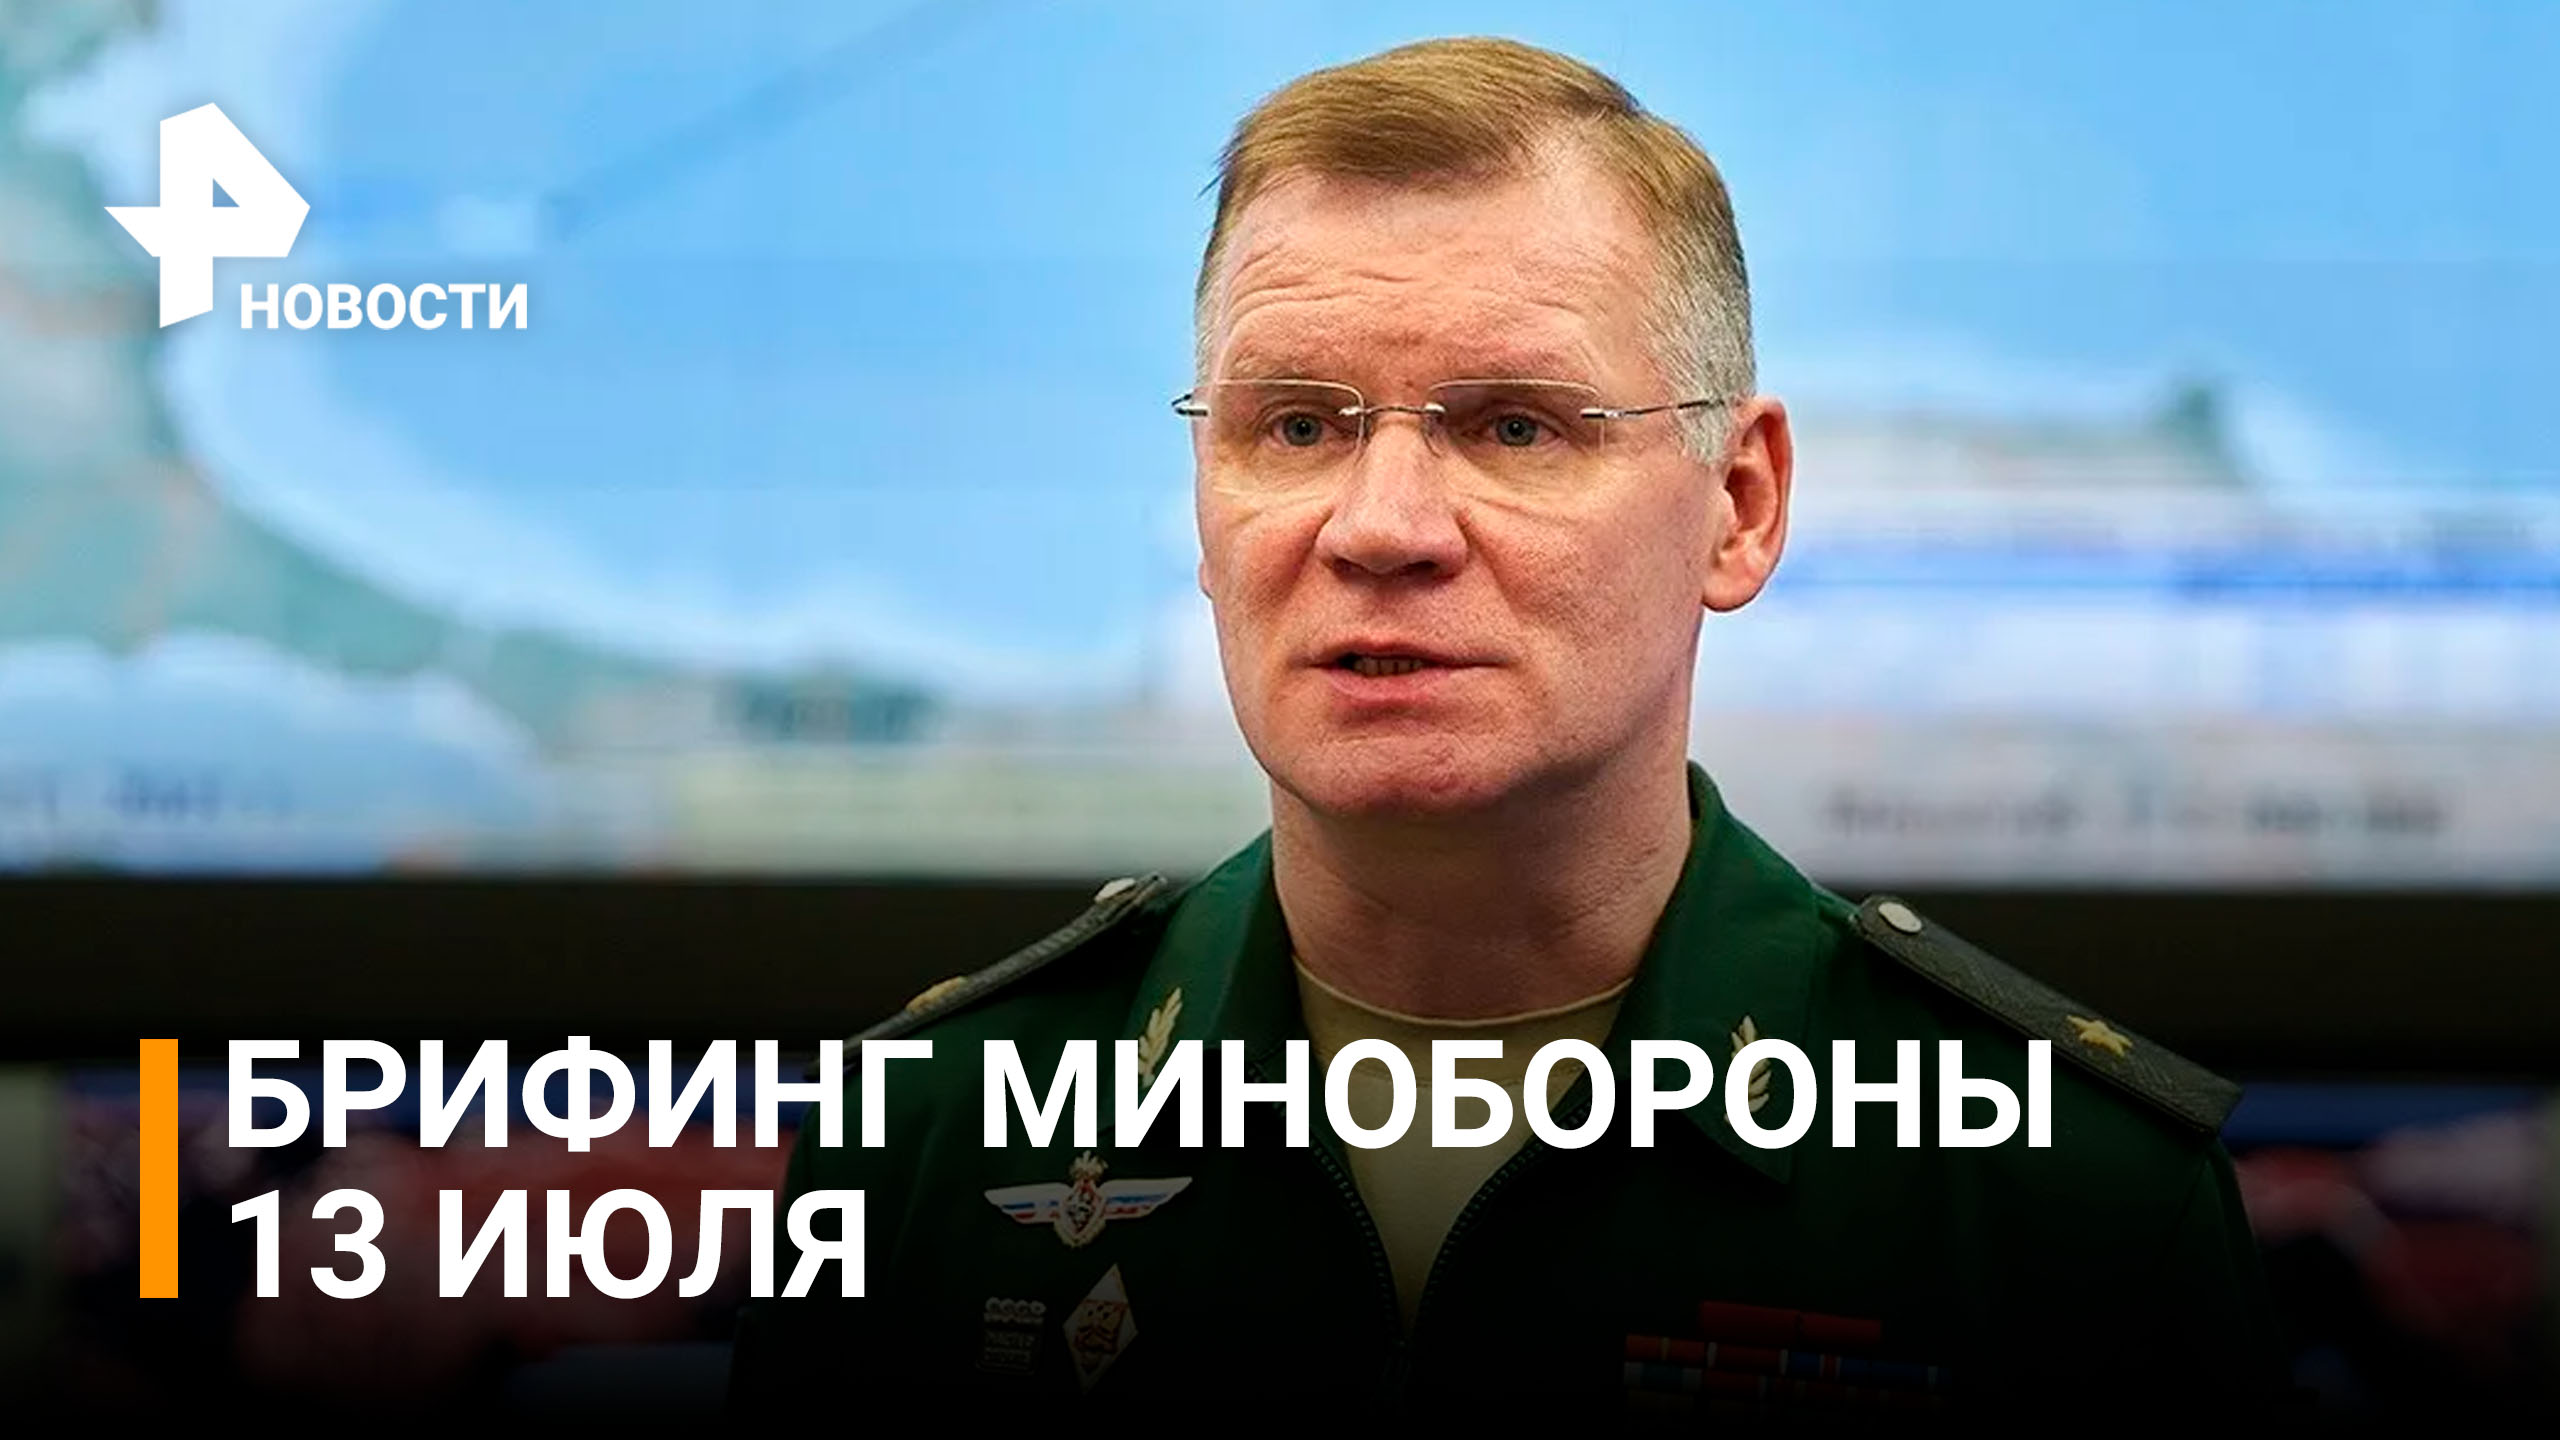 Сбиты 3 самолета Су-25 и Су-24 и 1 — МиГ-29 / РЕН Новости